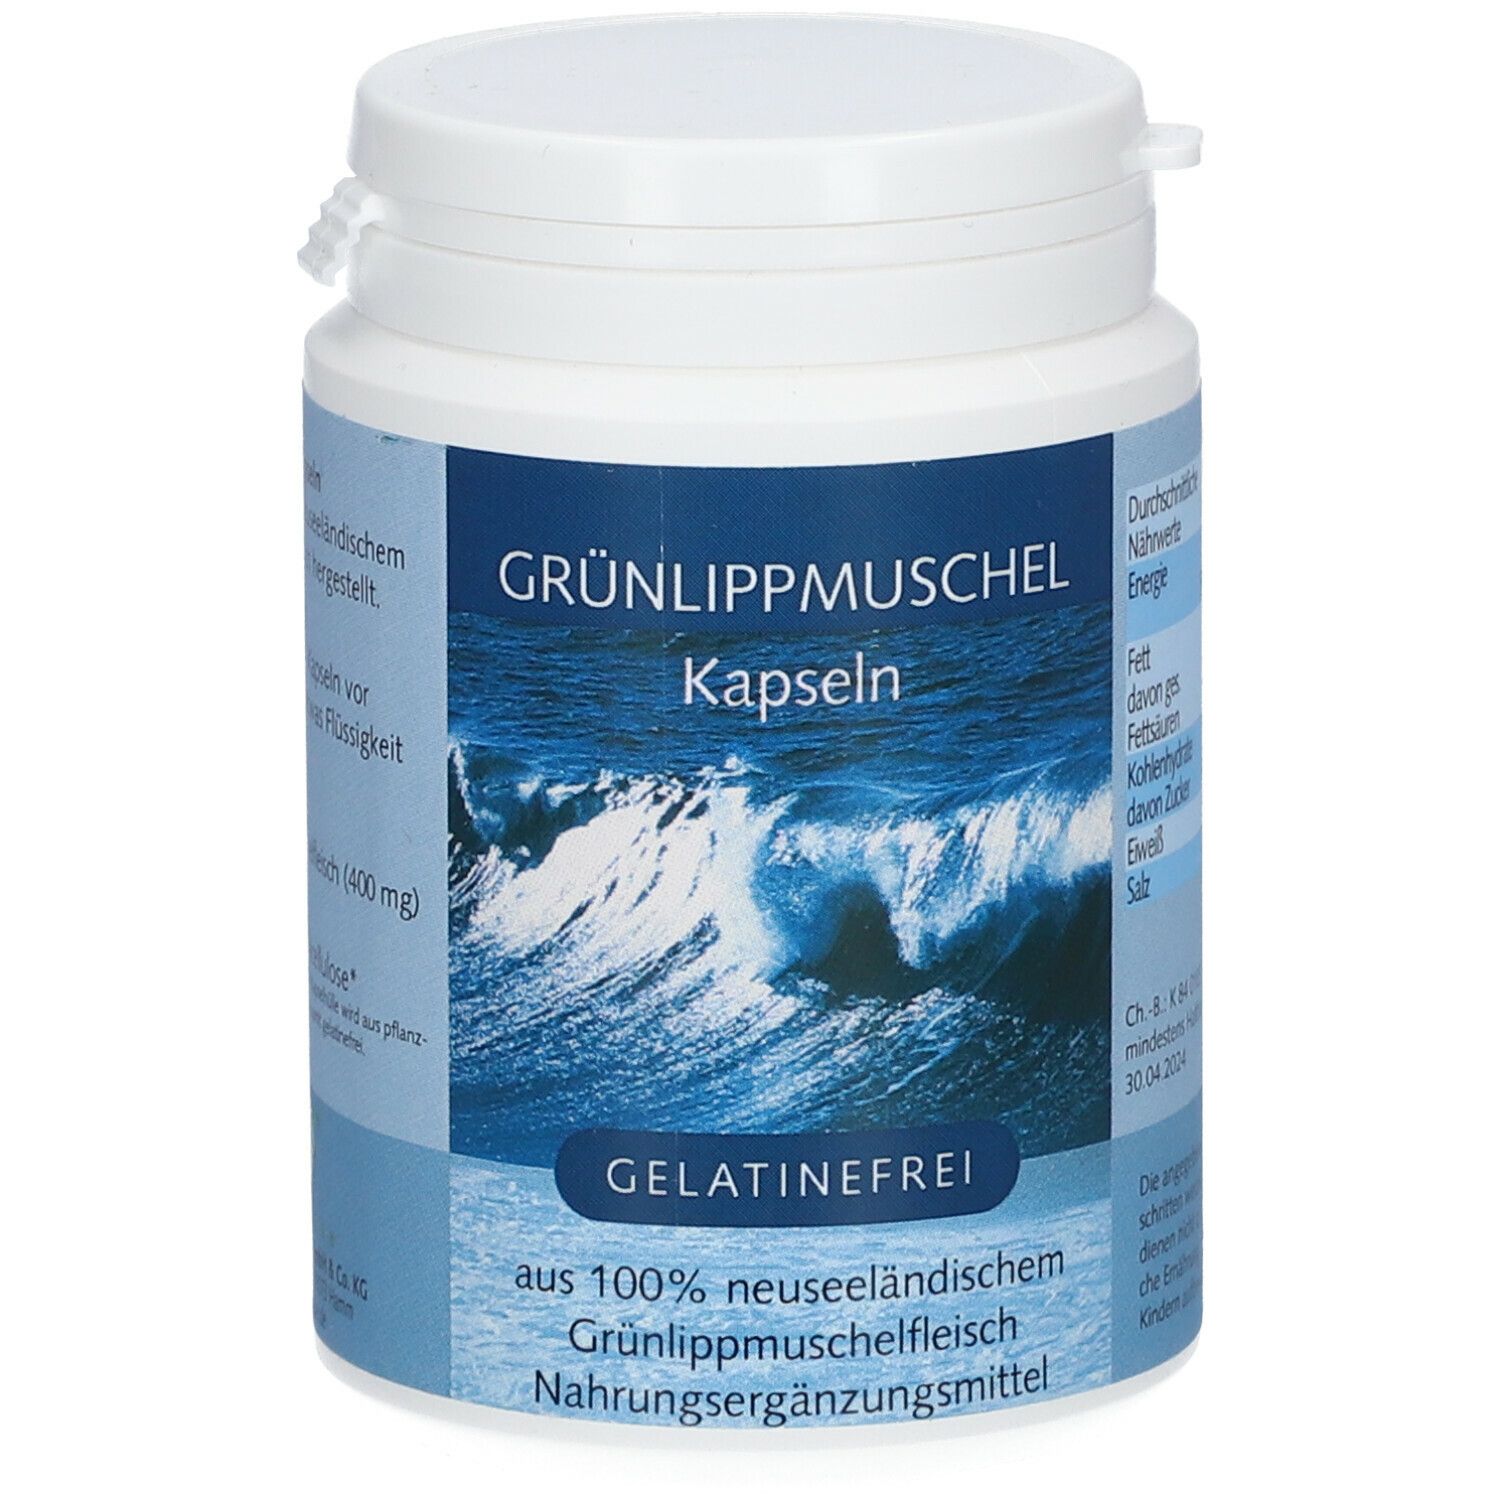 Image of Grünlippmuschel Kapseln